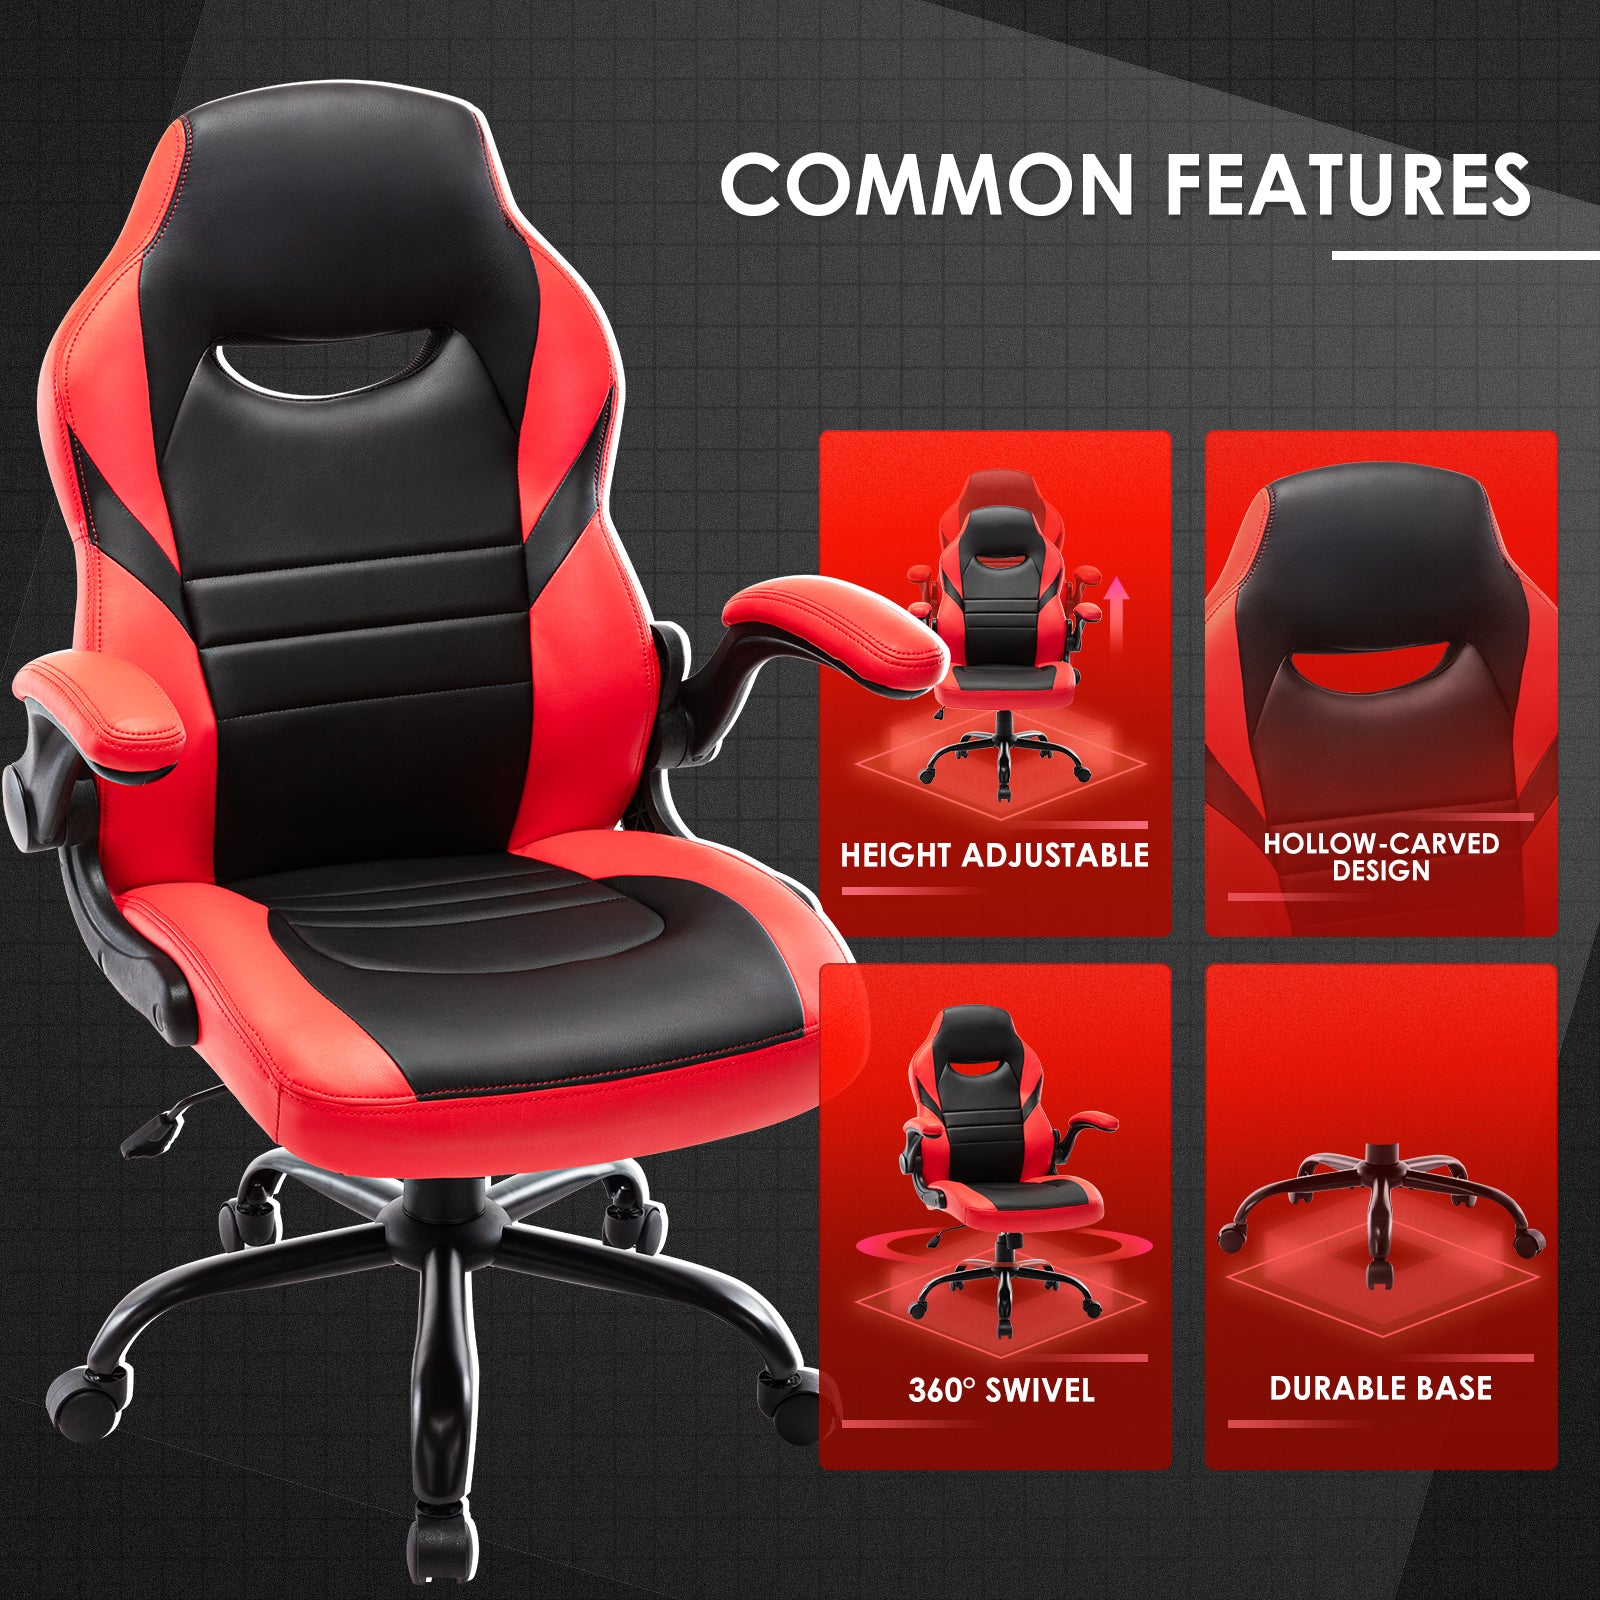 RaDEWAY Executive Gaming Chair Racing Computer Office Desk Chair, 360°Swivel Flip-up Arms Ergonomic Design for Lumbar Support